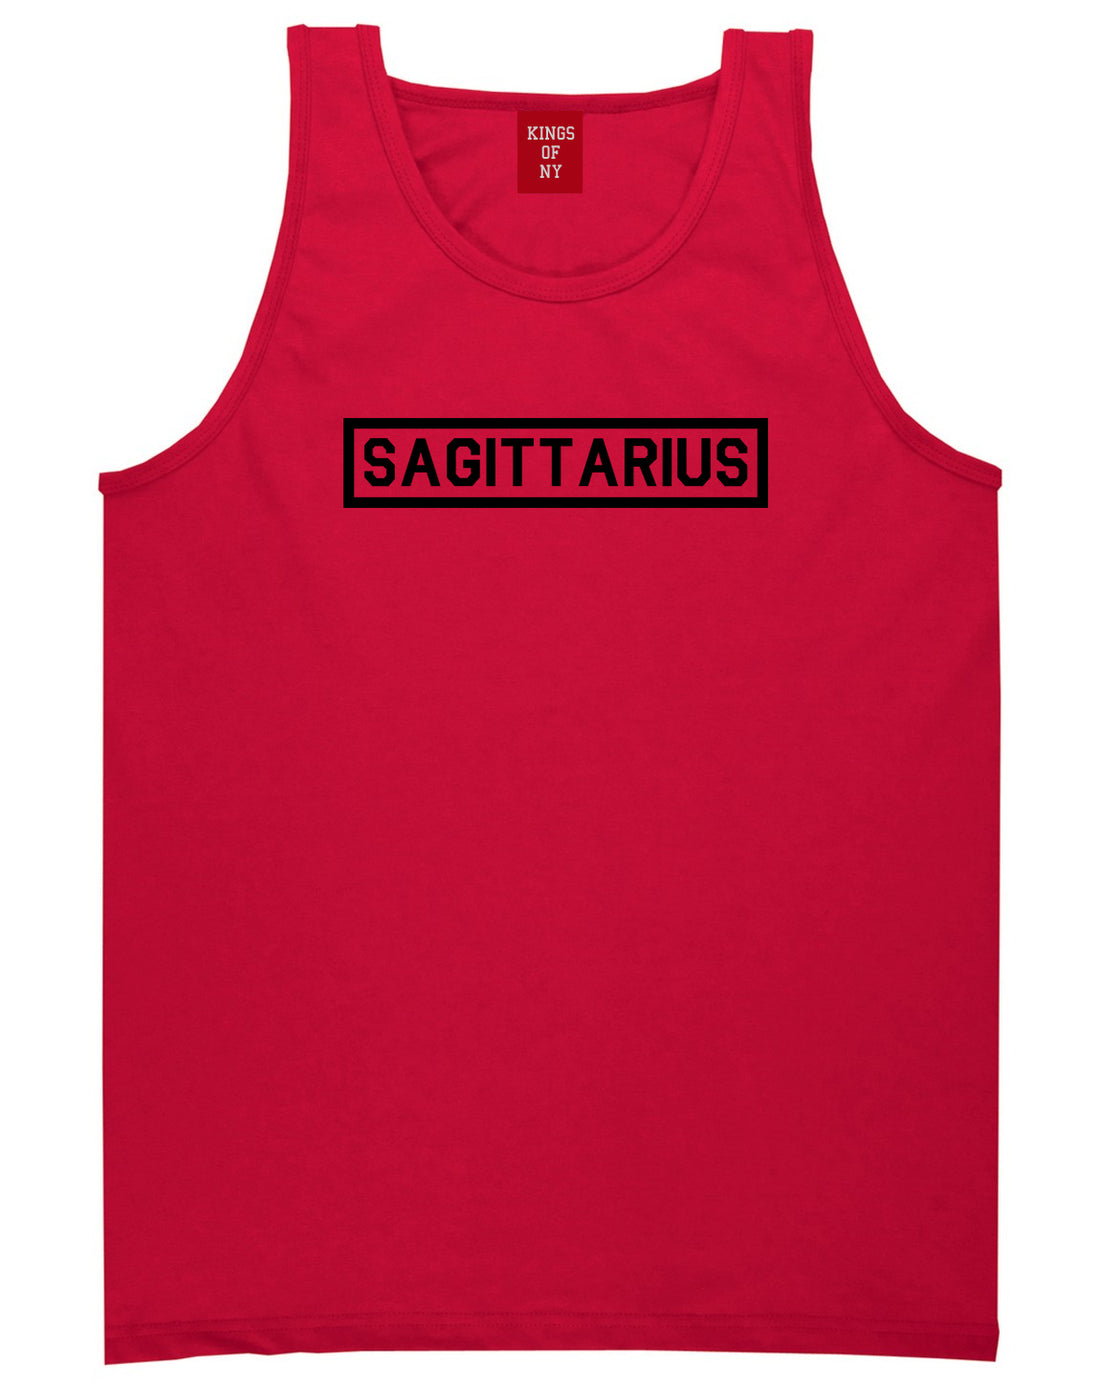 Sagittarius Horoscope Sign Mens Red Tank Top Shirt by KINGS OF NY